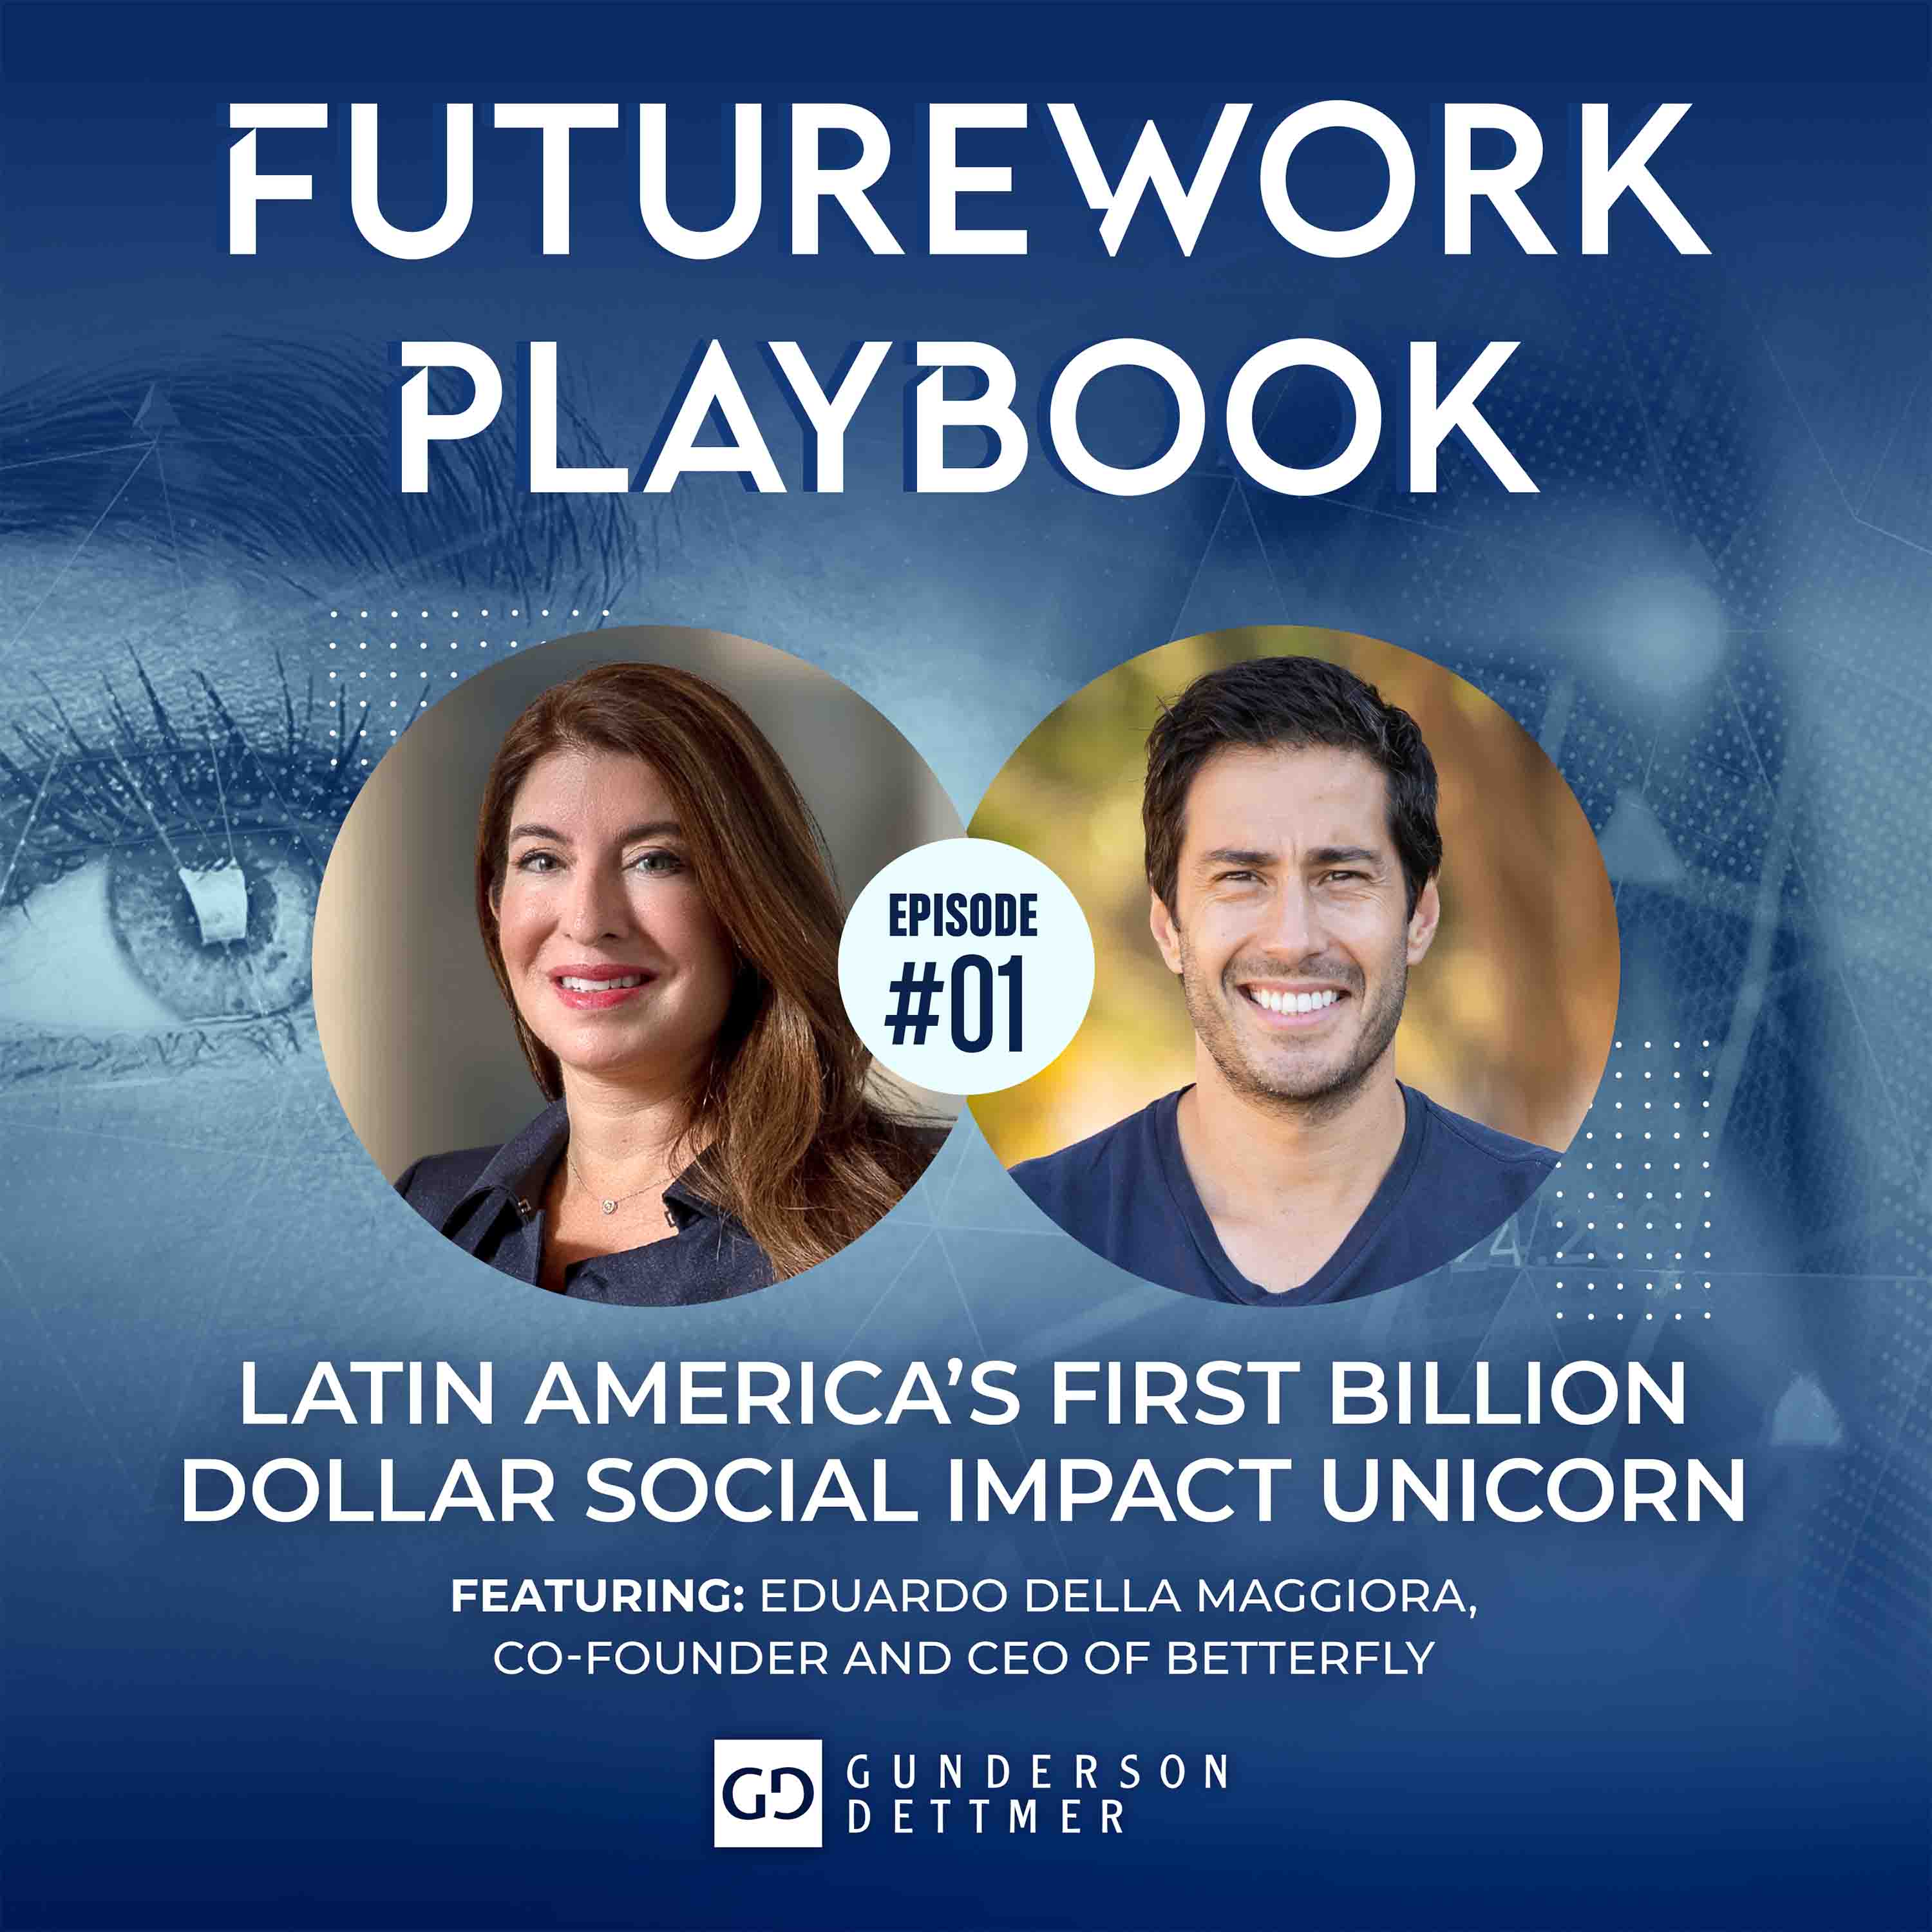 Latin America’s First Billion Dollar Social Impact Unicorn